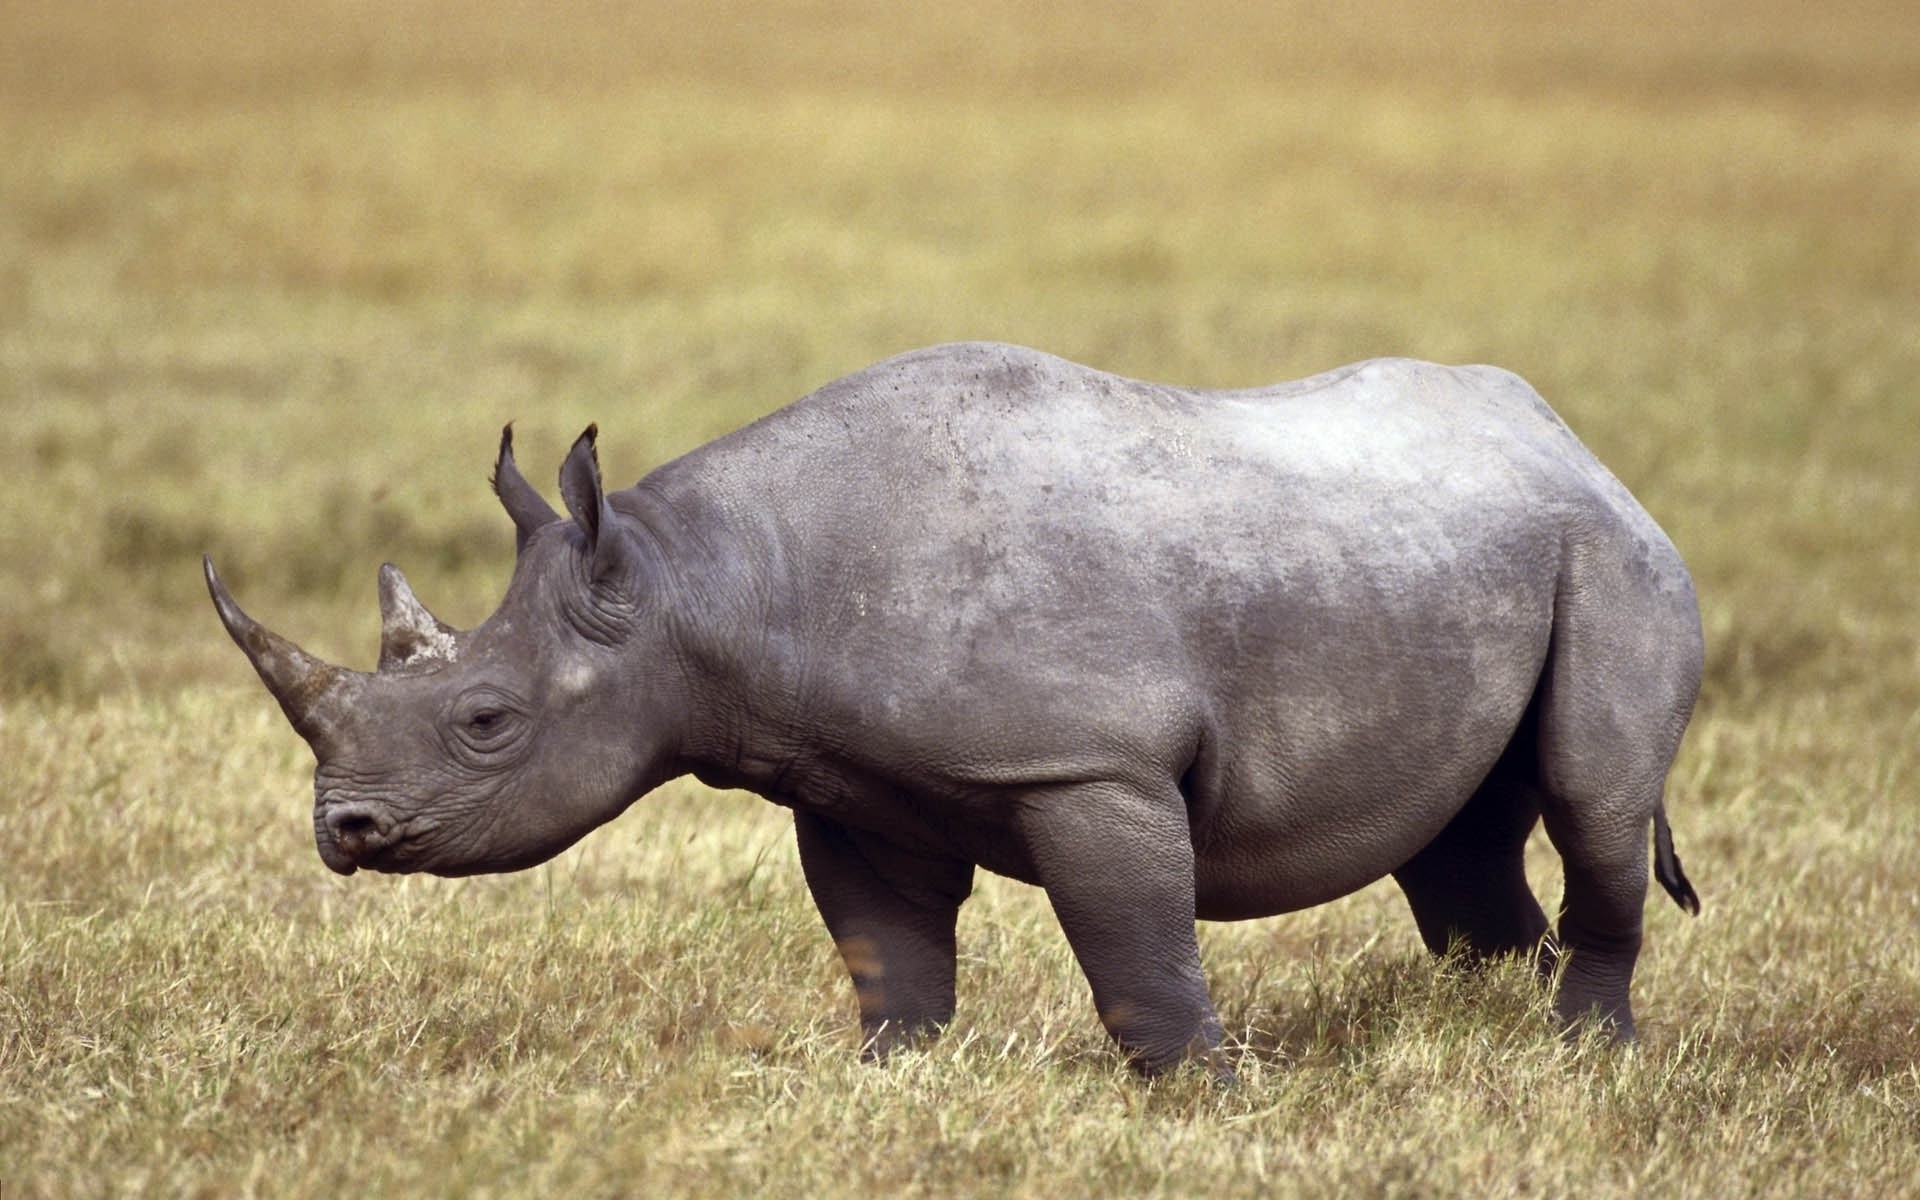 Rhino with prominent horns, Vast field background, Rhino image in high resolution, Wallpx wallpaper, 1920x1200 HD Desktop